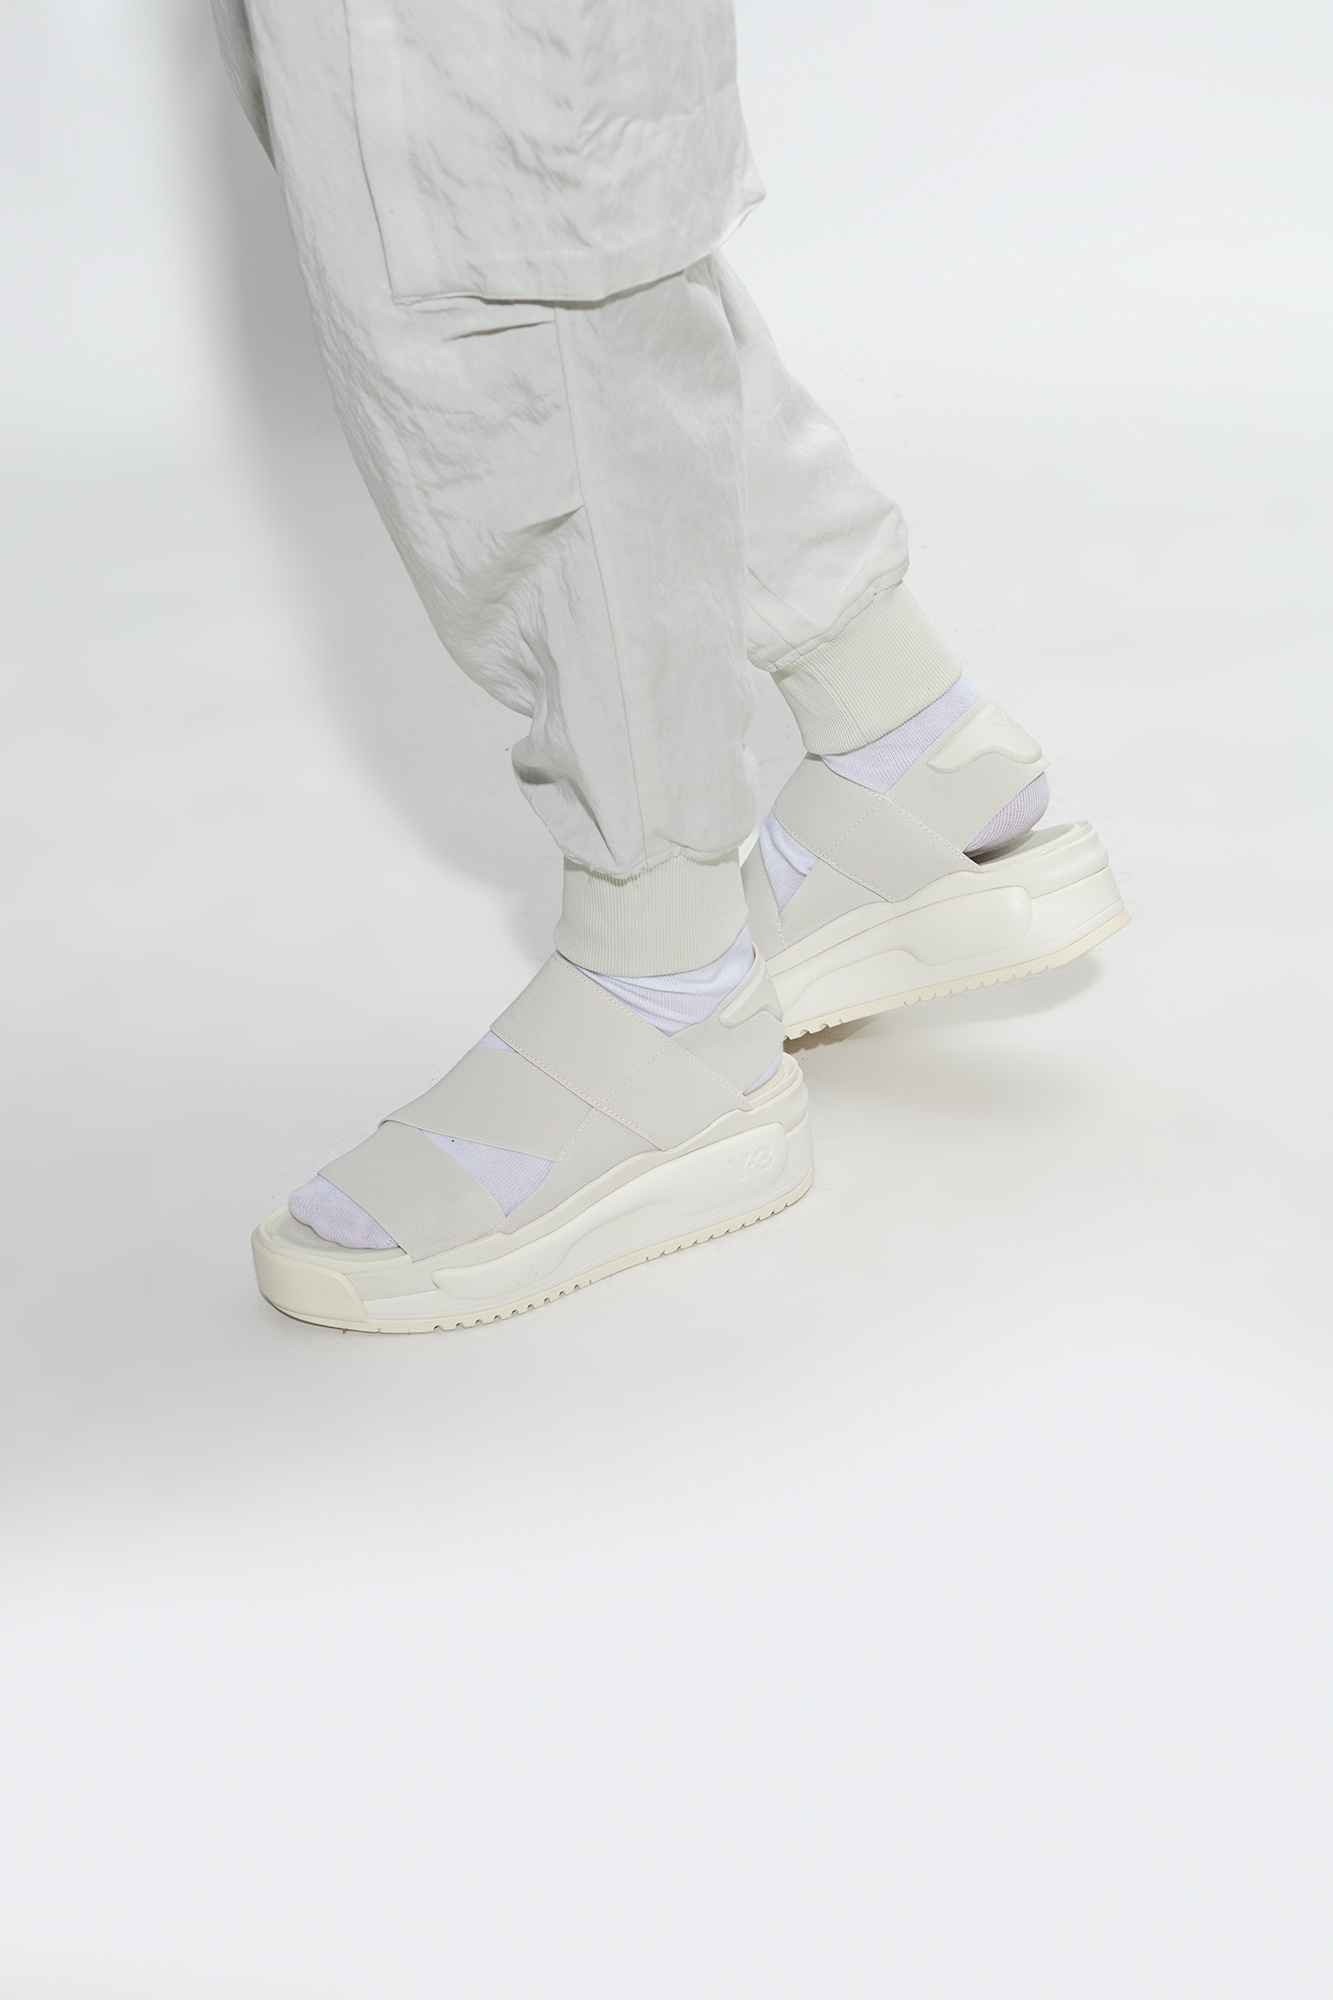 Cream 'Rivalry' platform sandals Y-3 Yohji Yamamoto - Vitkac GB